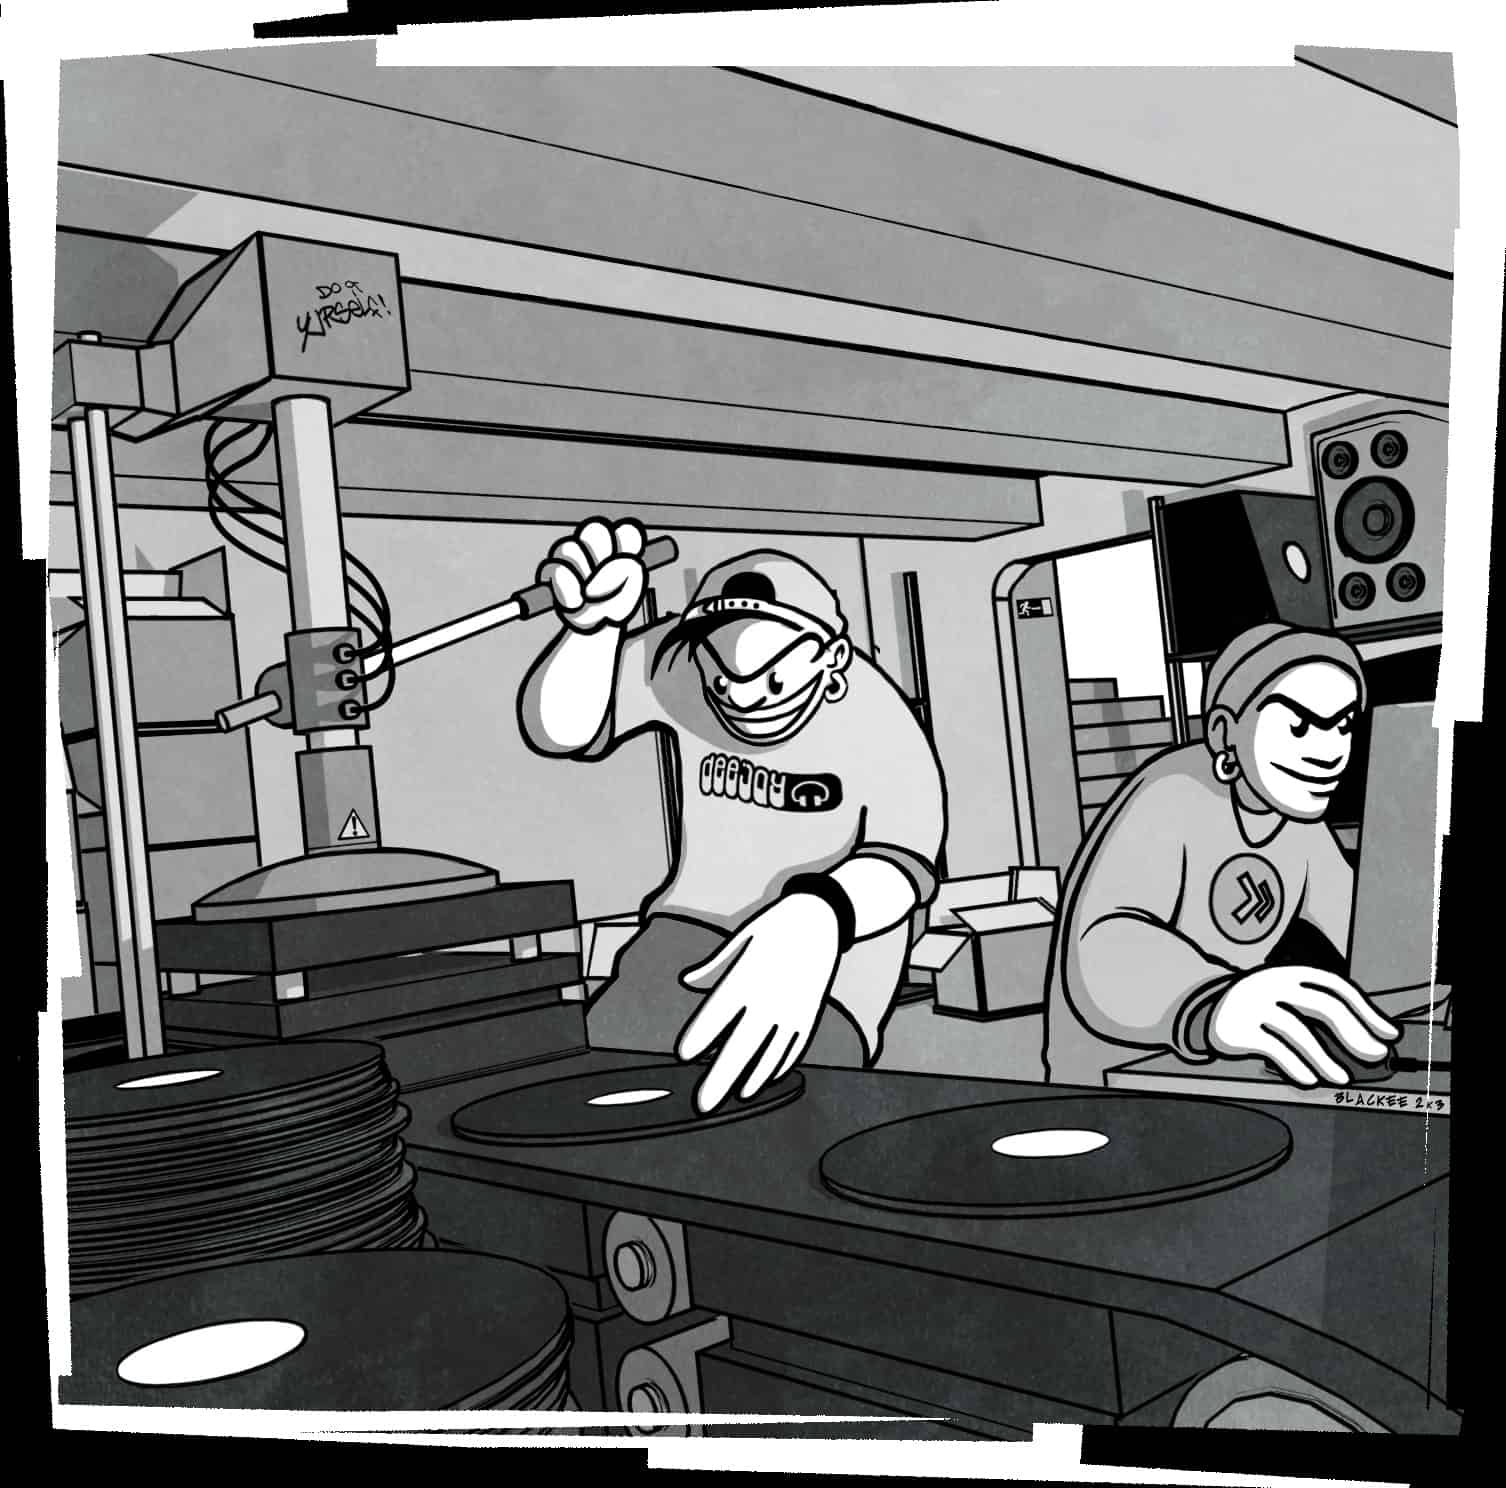 <br />
FKY Tribe hardtek vinyl press chain with 2 guys